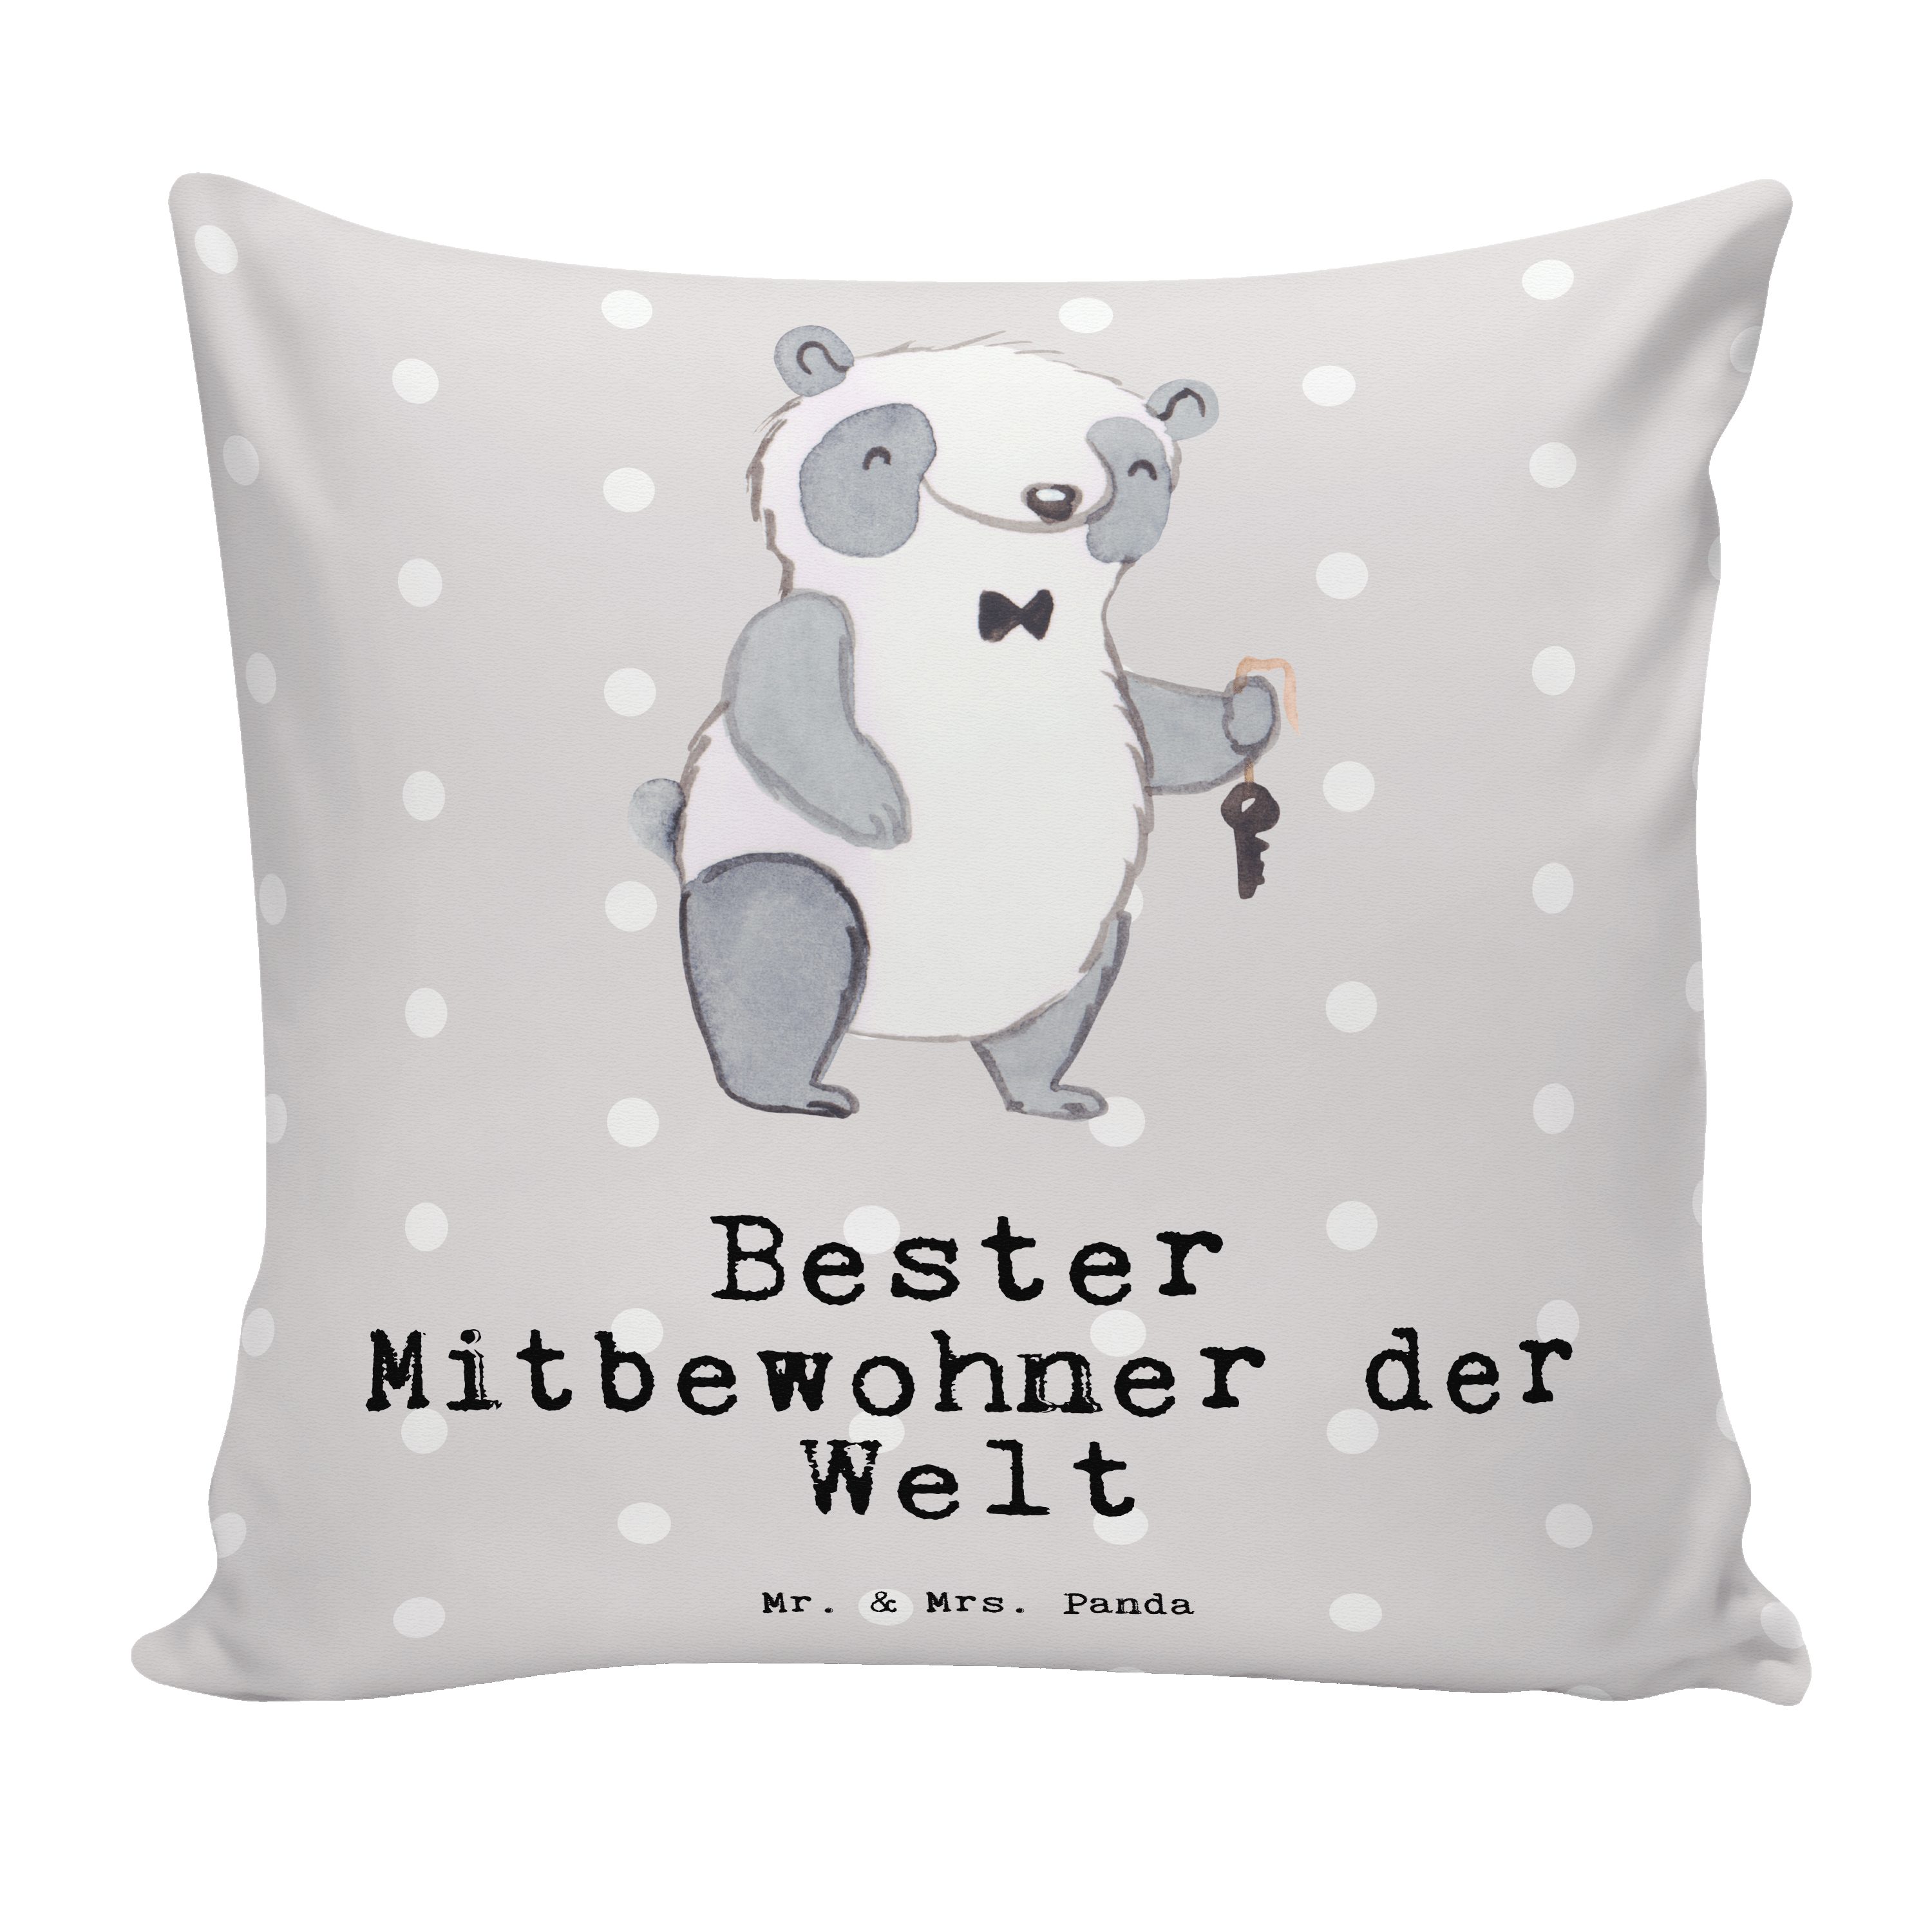 Mr. & Mrs. Panda Dekokissen Panda Bester Mitbewohner der Welt - Grau Pastell - Geschenk, Sofakiss